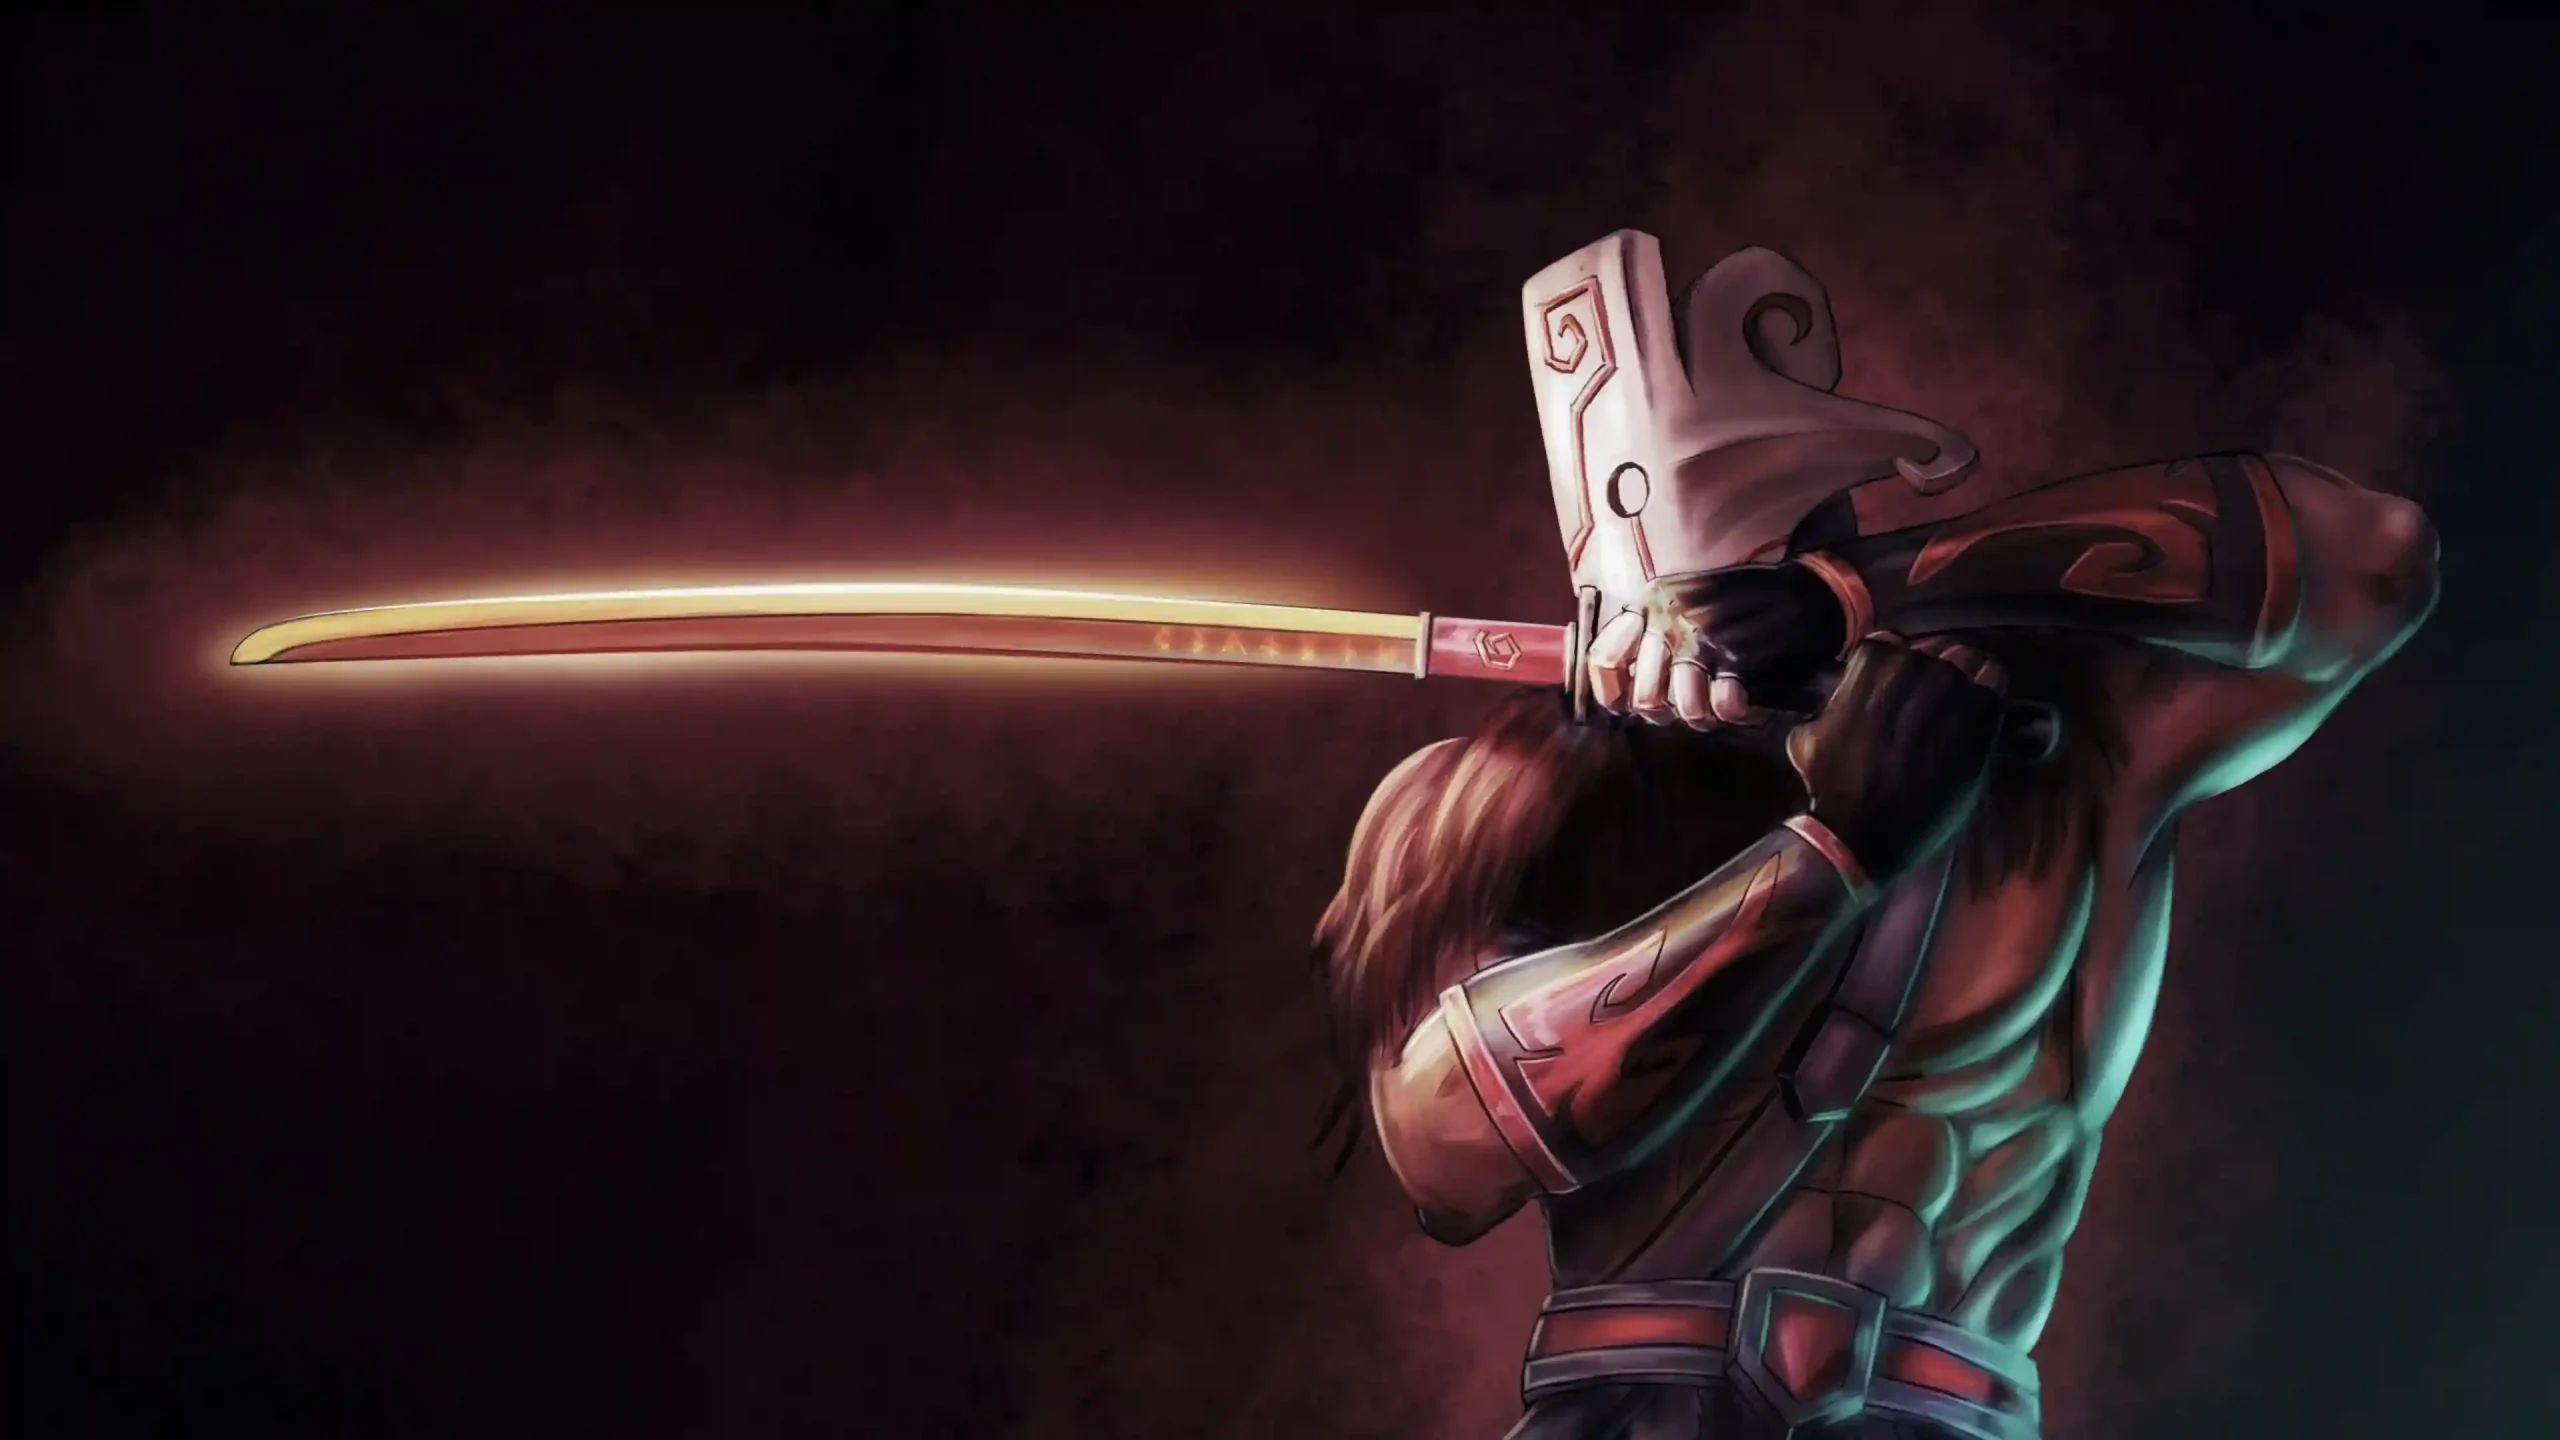 Juggernaut Dota 2 with sword